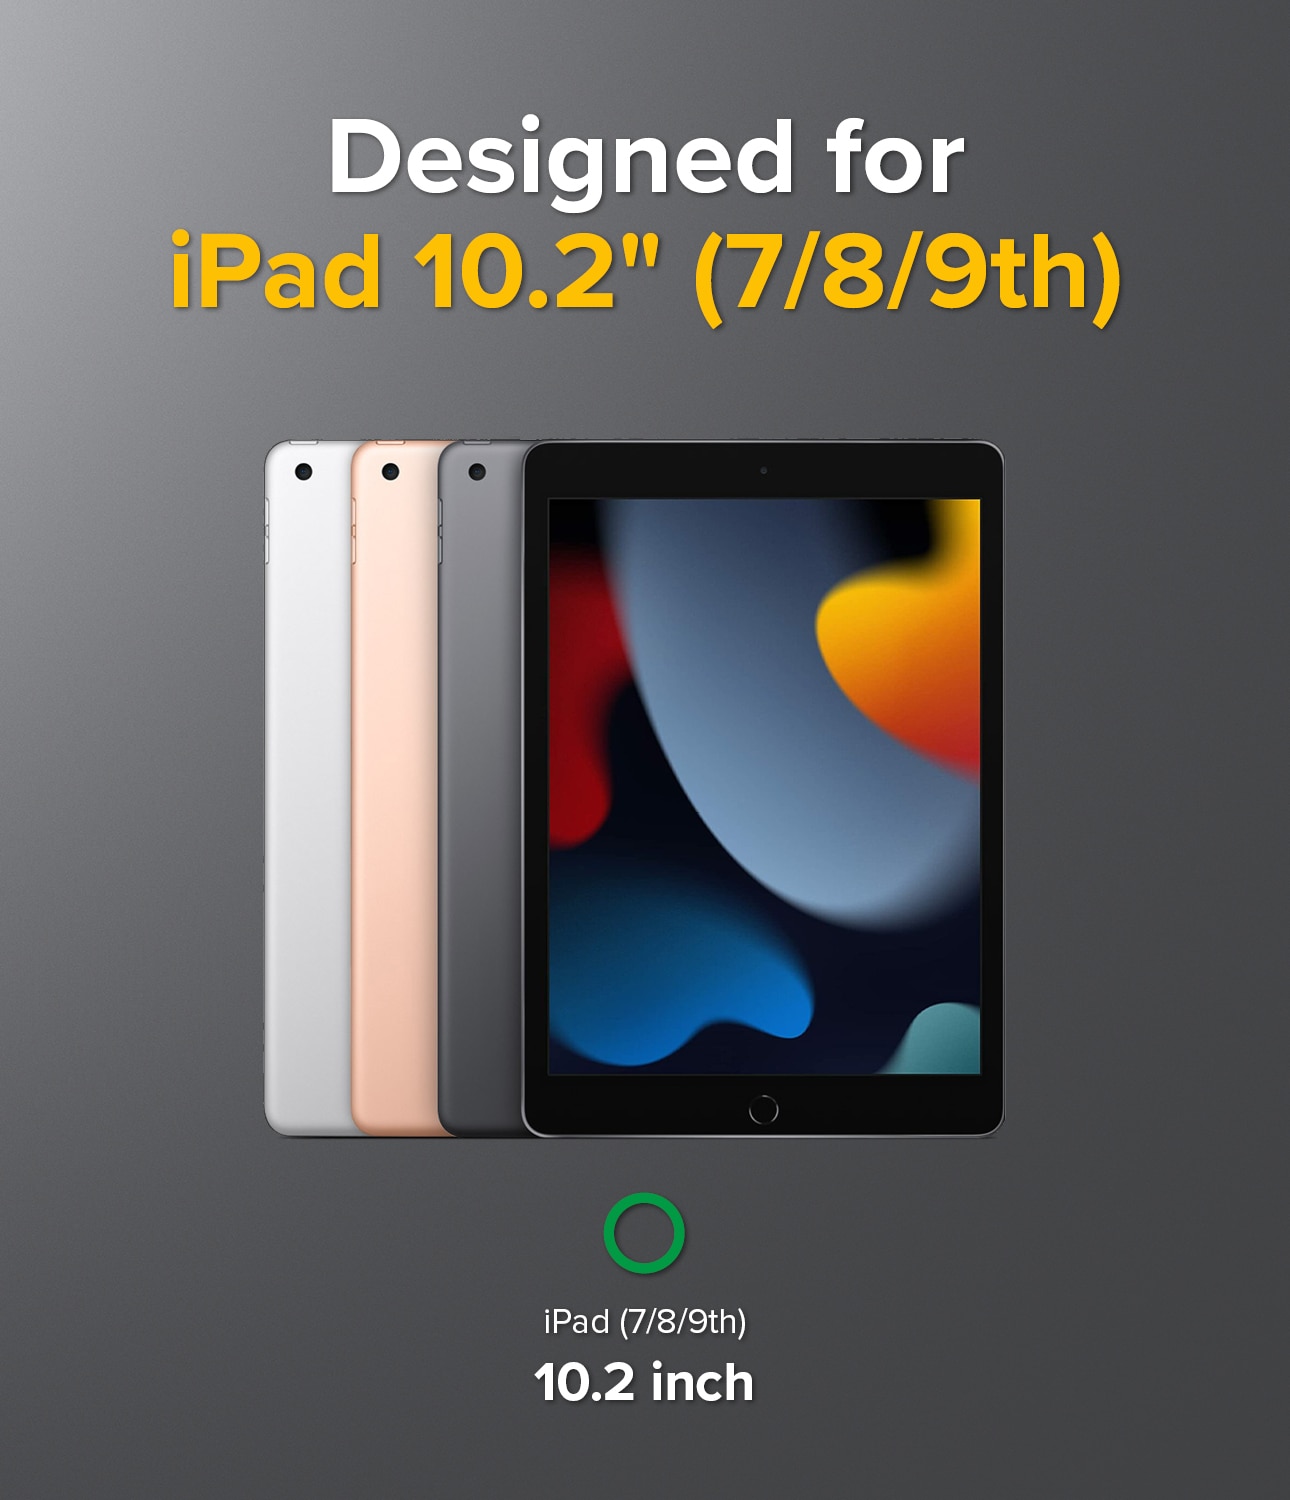 iPad 10.2 7th Gen (2019) Fusion Plus Case White/Lime Glow